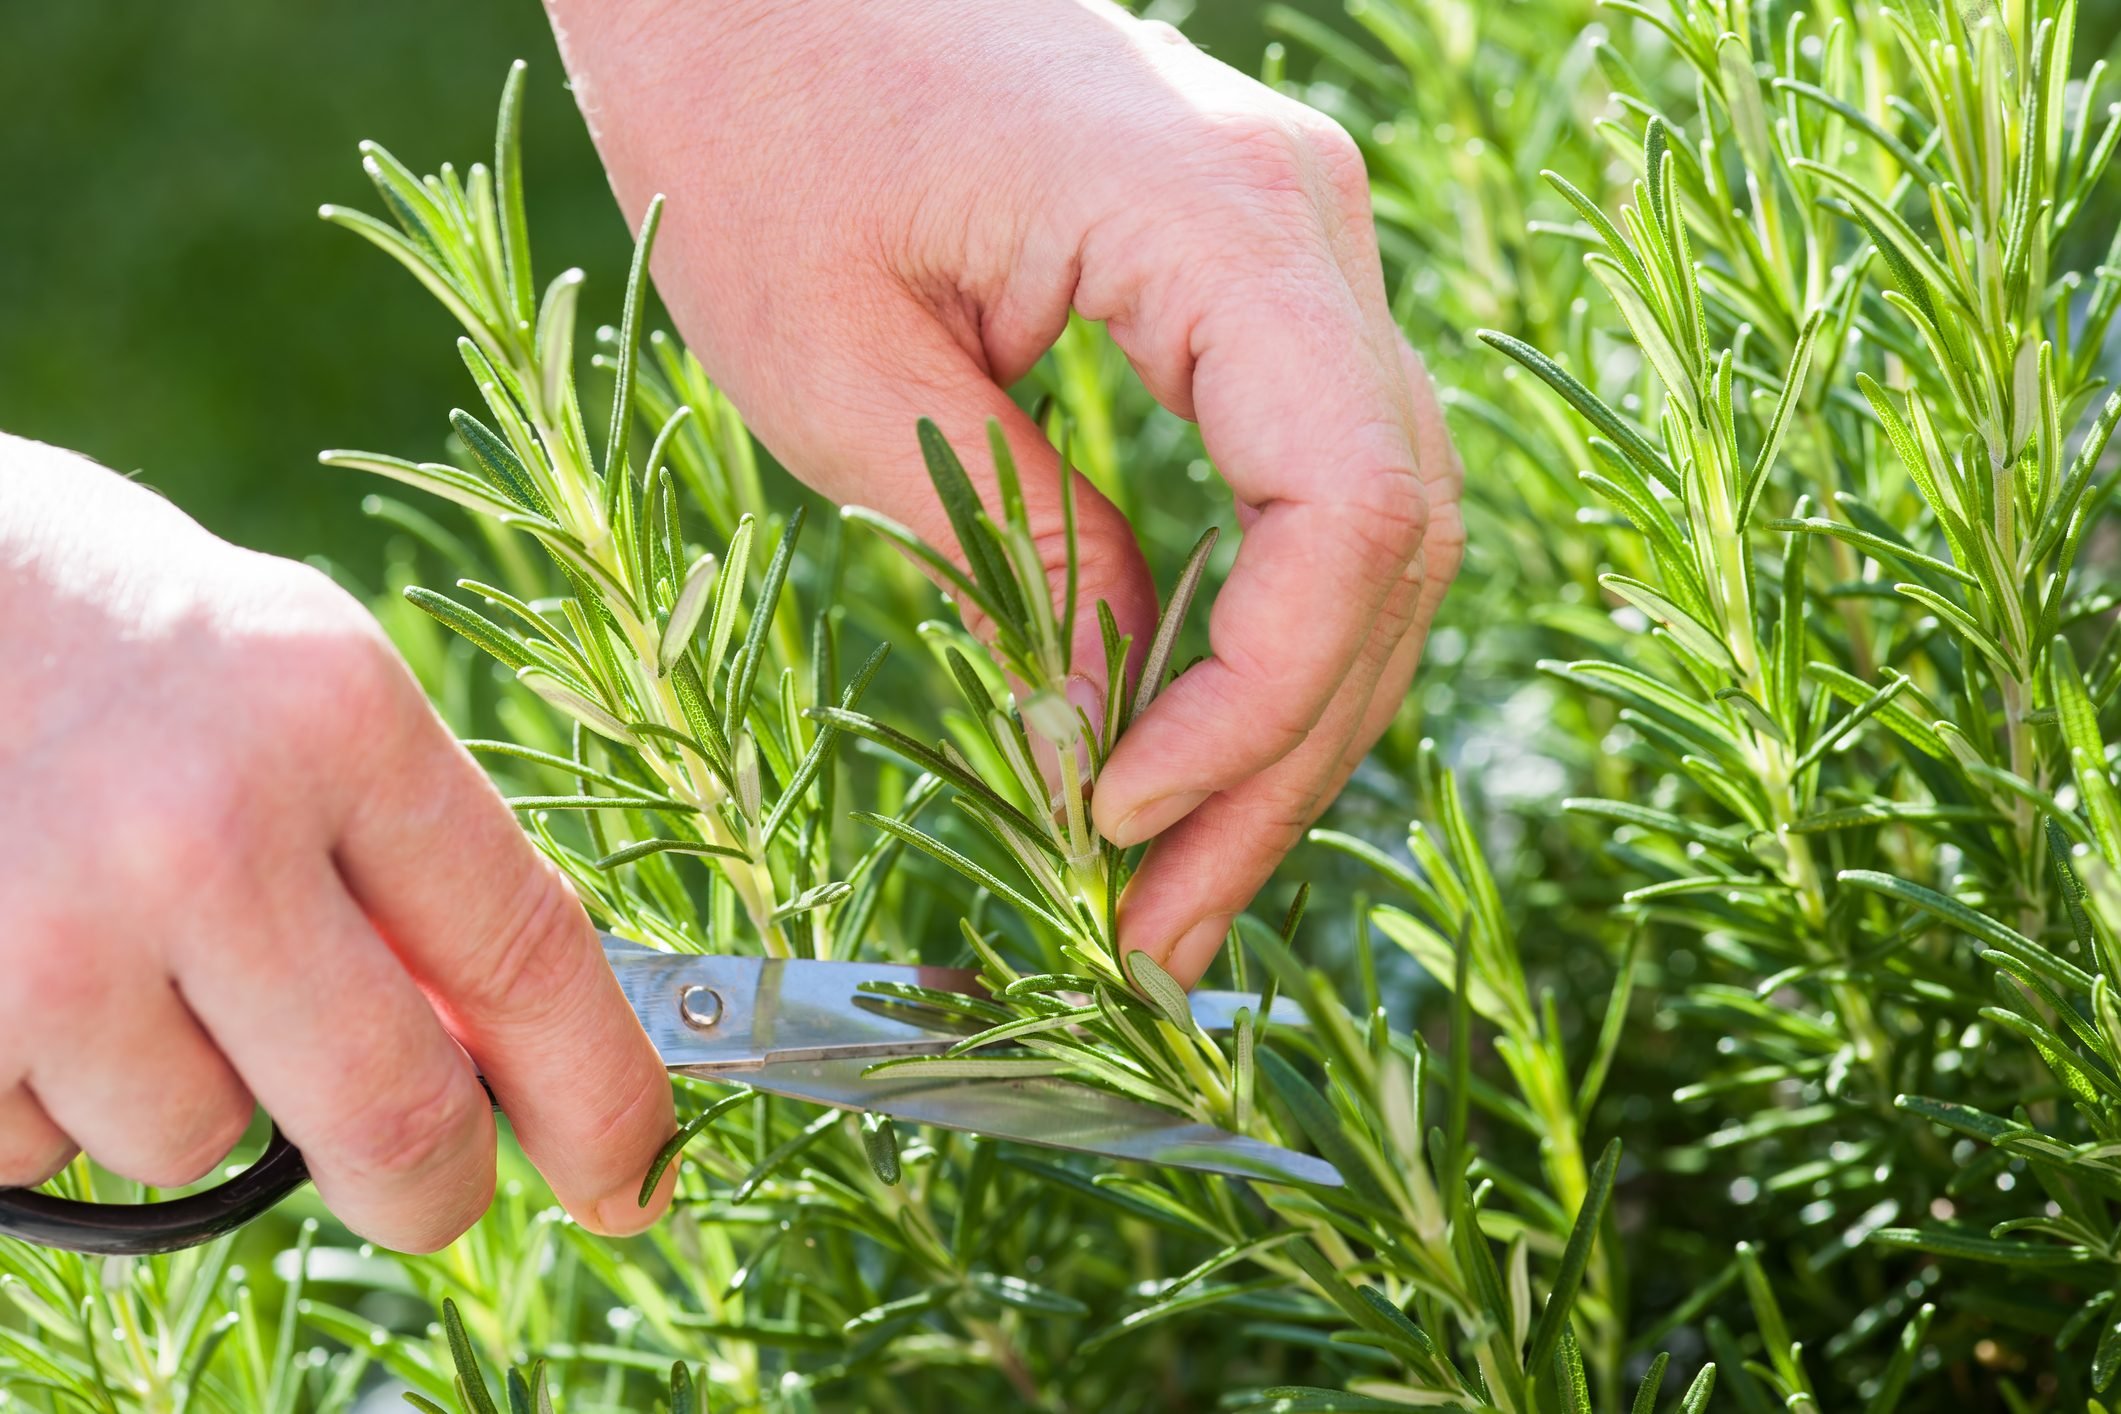 How to Prune Rosemary